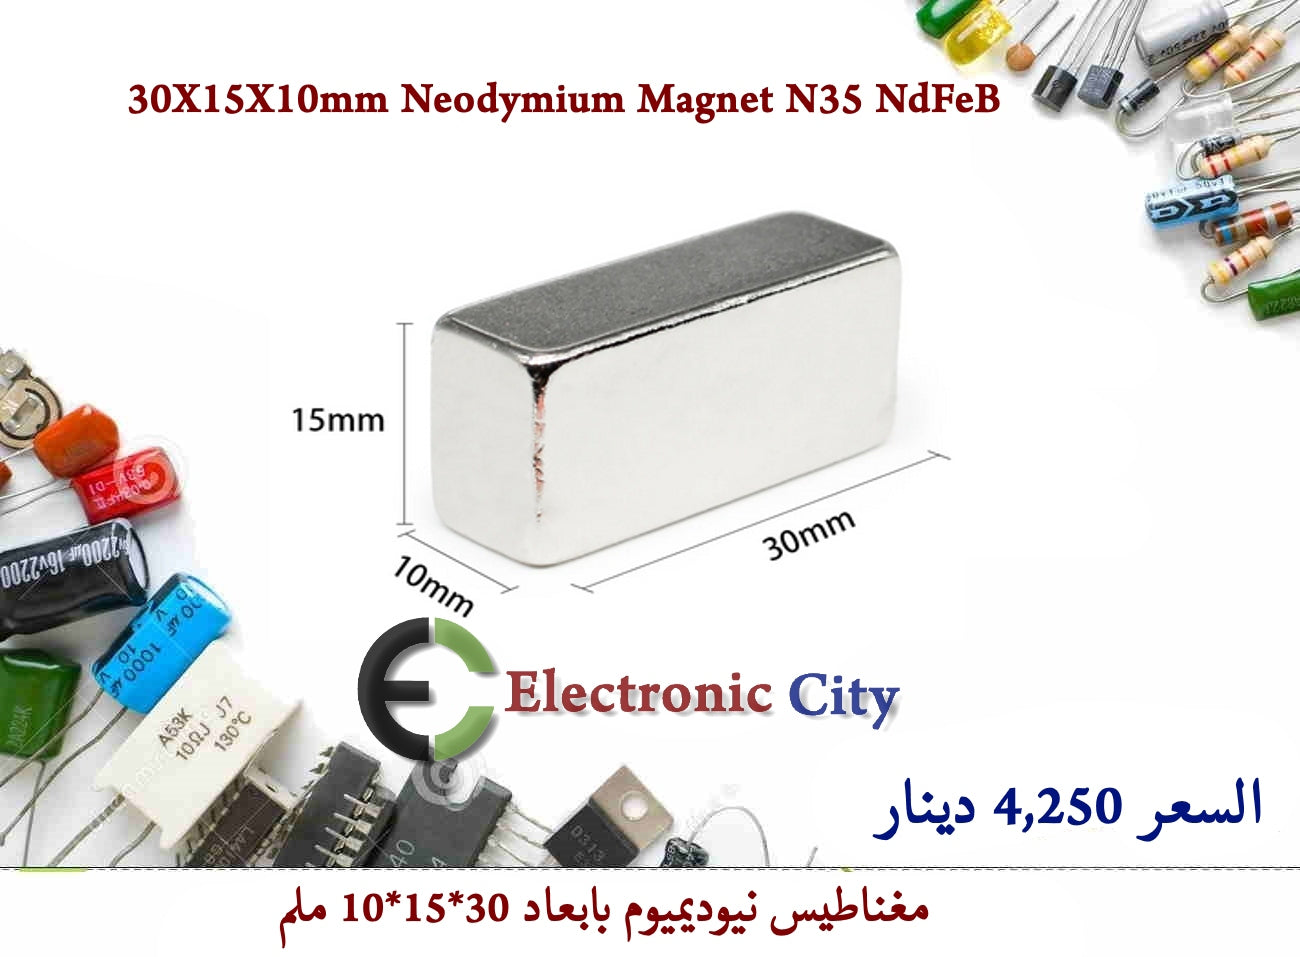 30X15X10mm Neodymium Magnet N35 NdFeB